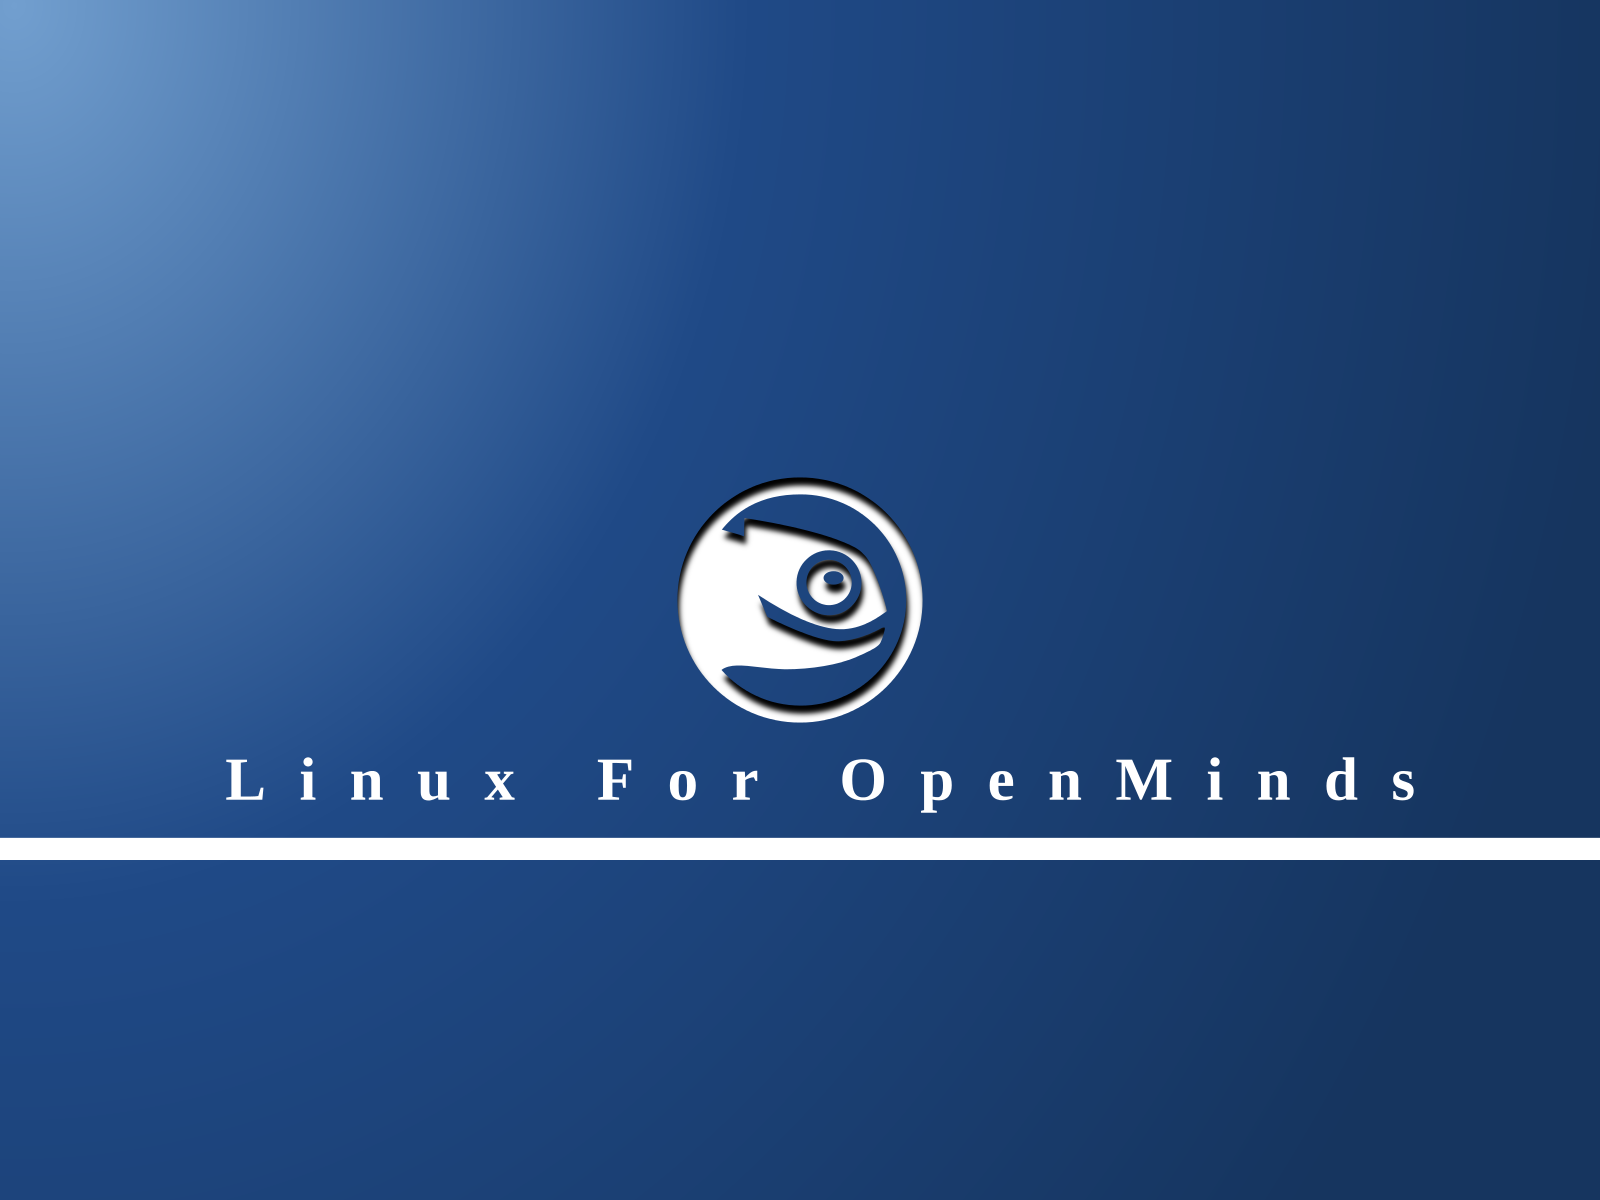 Desktop e openSUSE wallpapers | J.Roberto's blog